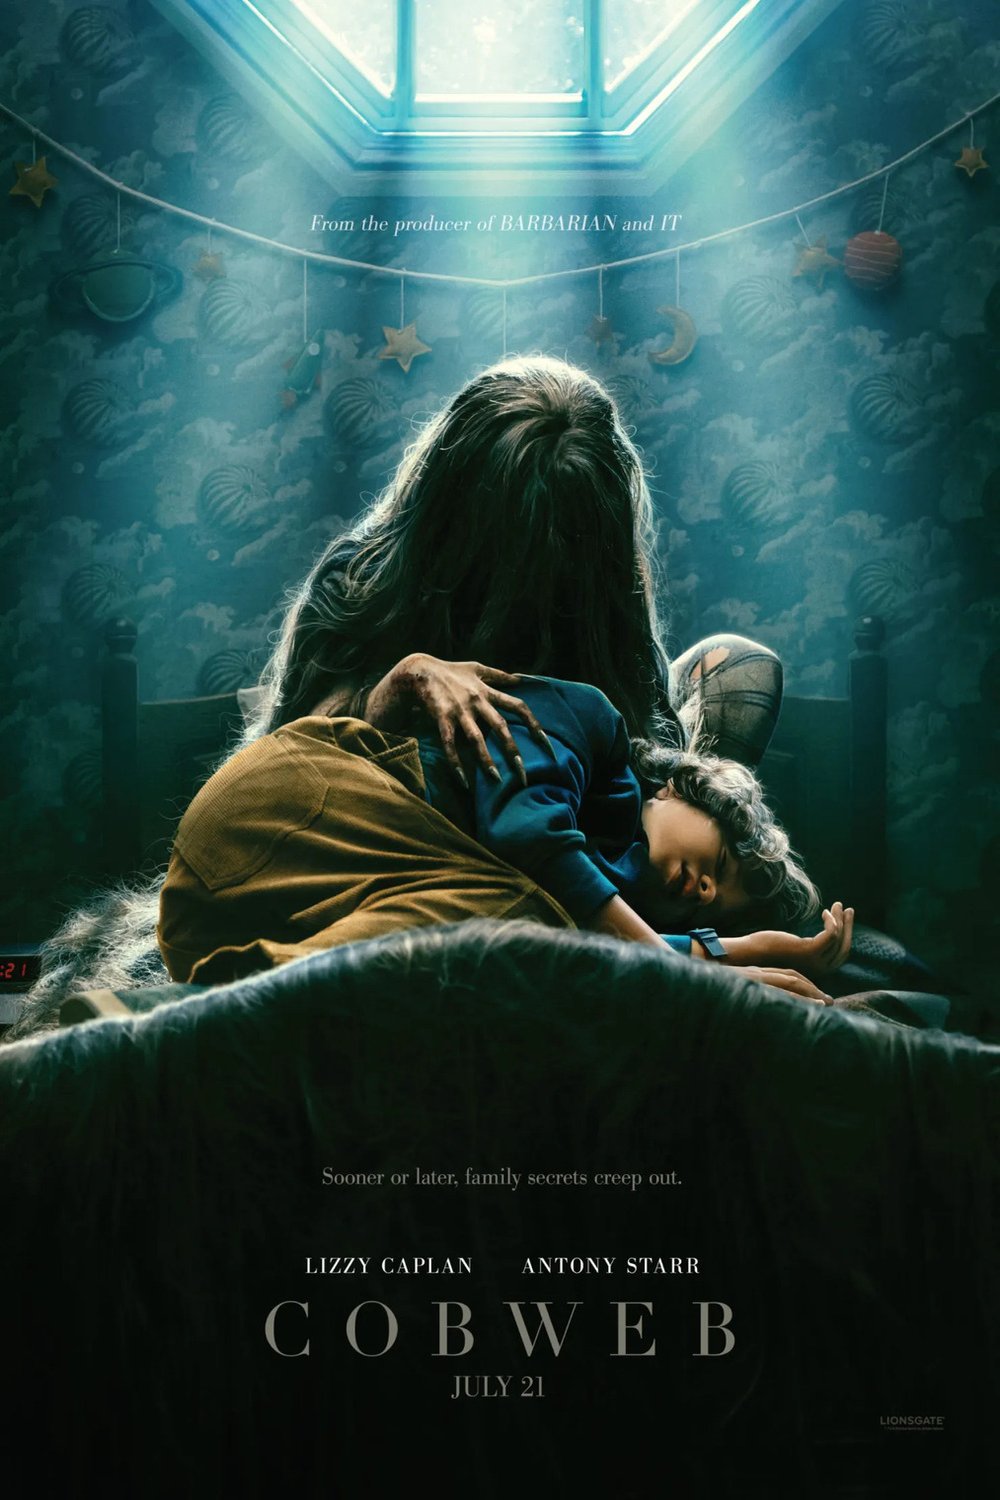 Poster of the movie Cobweb